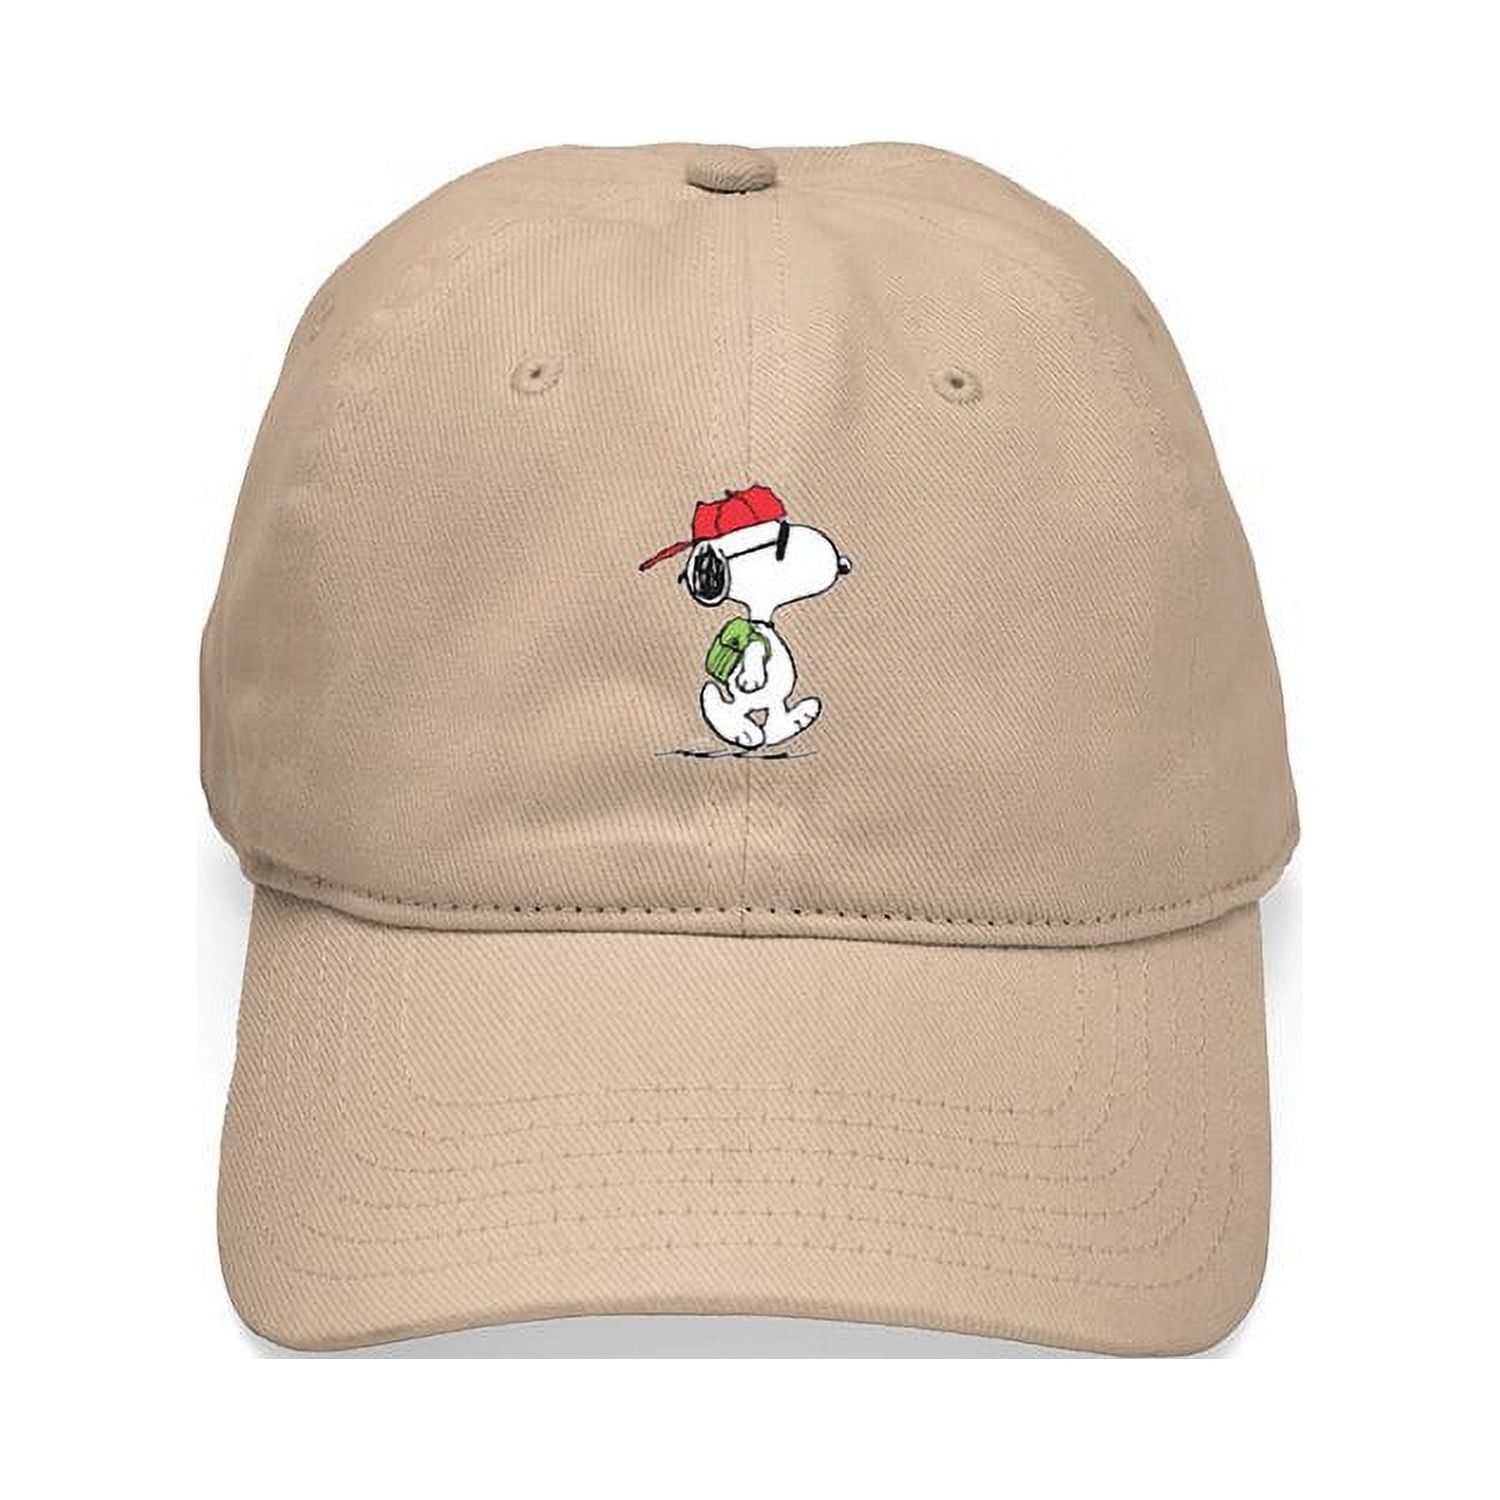 Hat Printed - Joe CafePress Baseball Adjustable SNOOPY - Cool